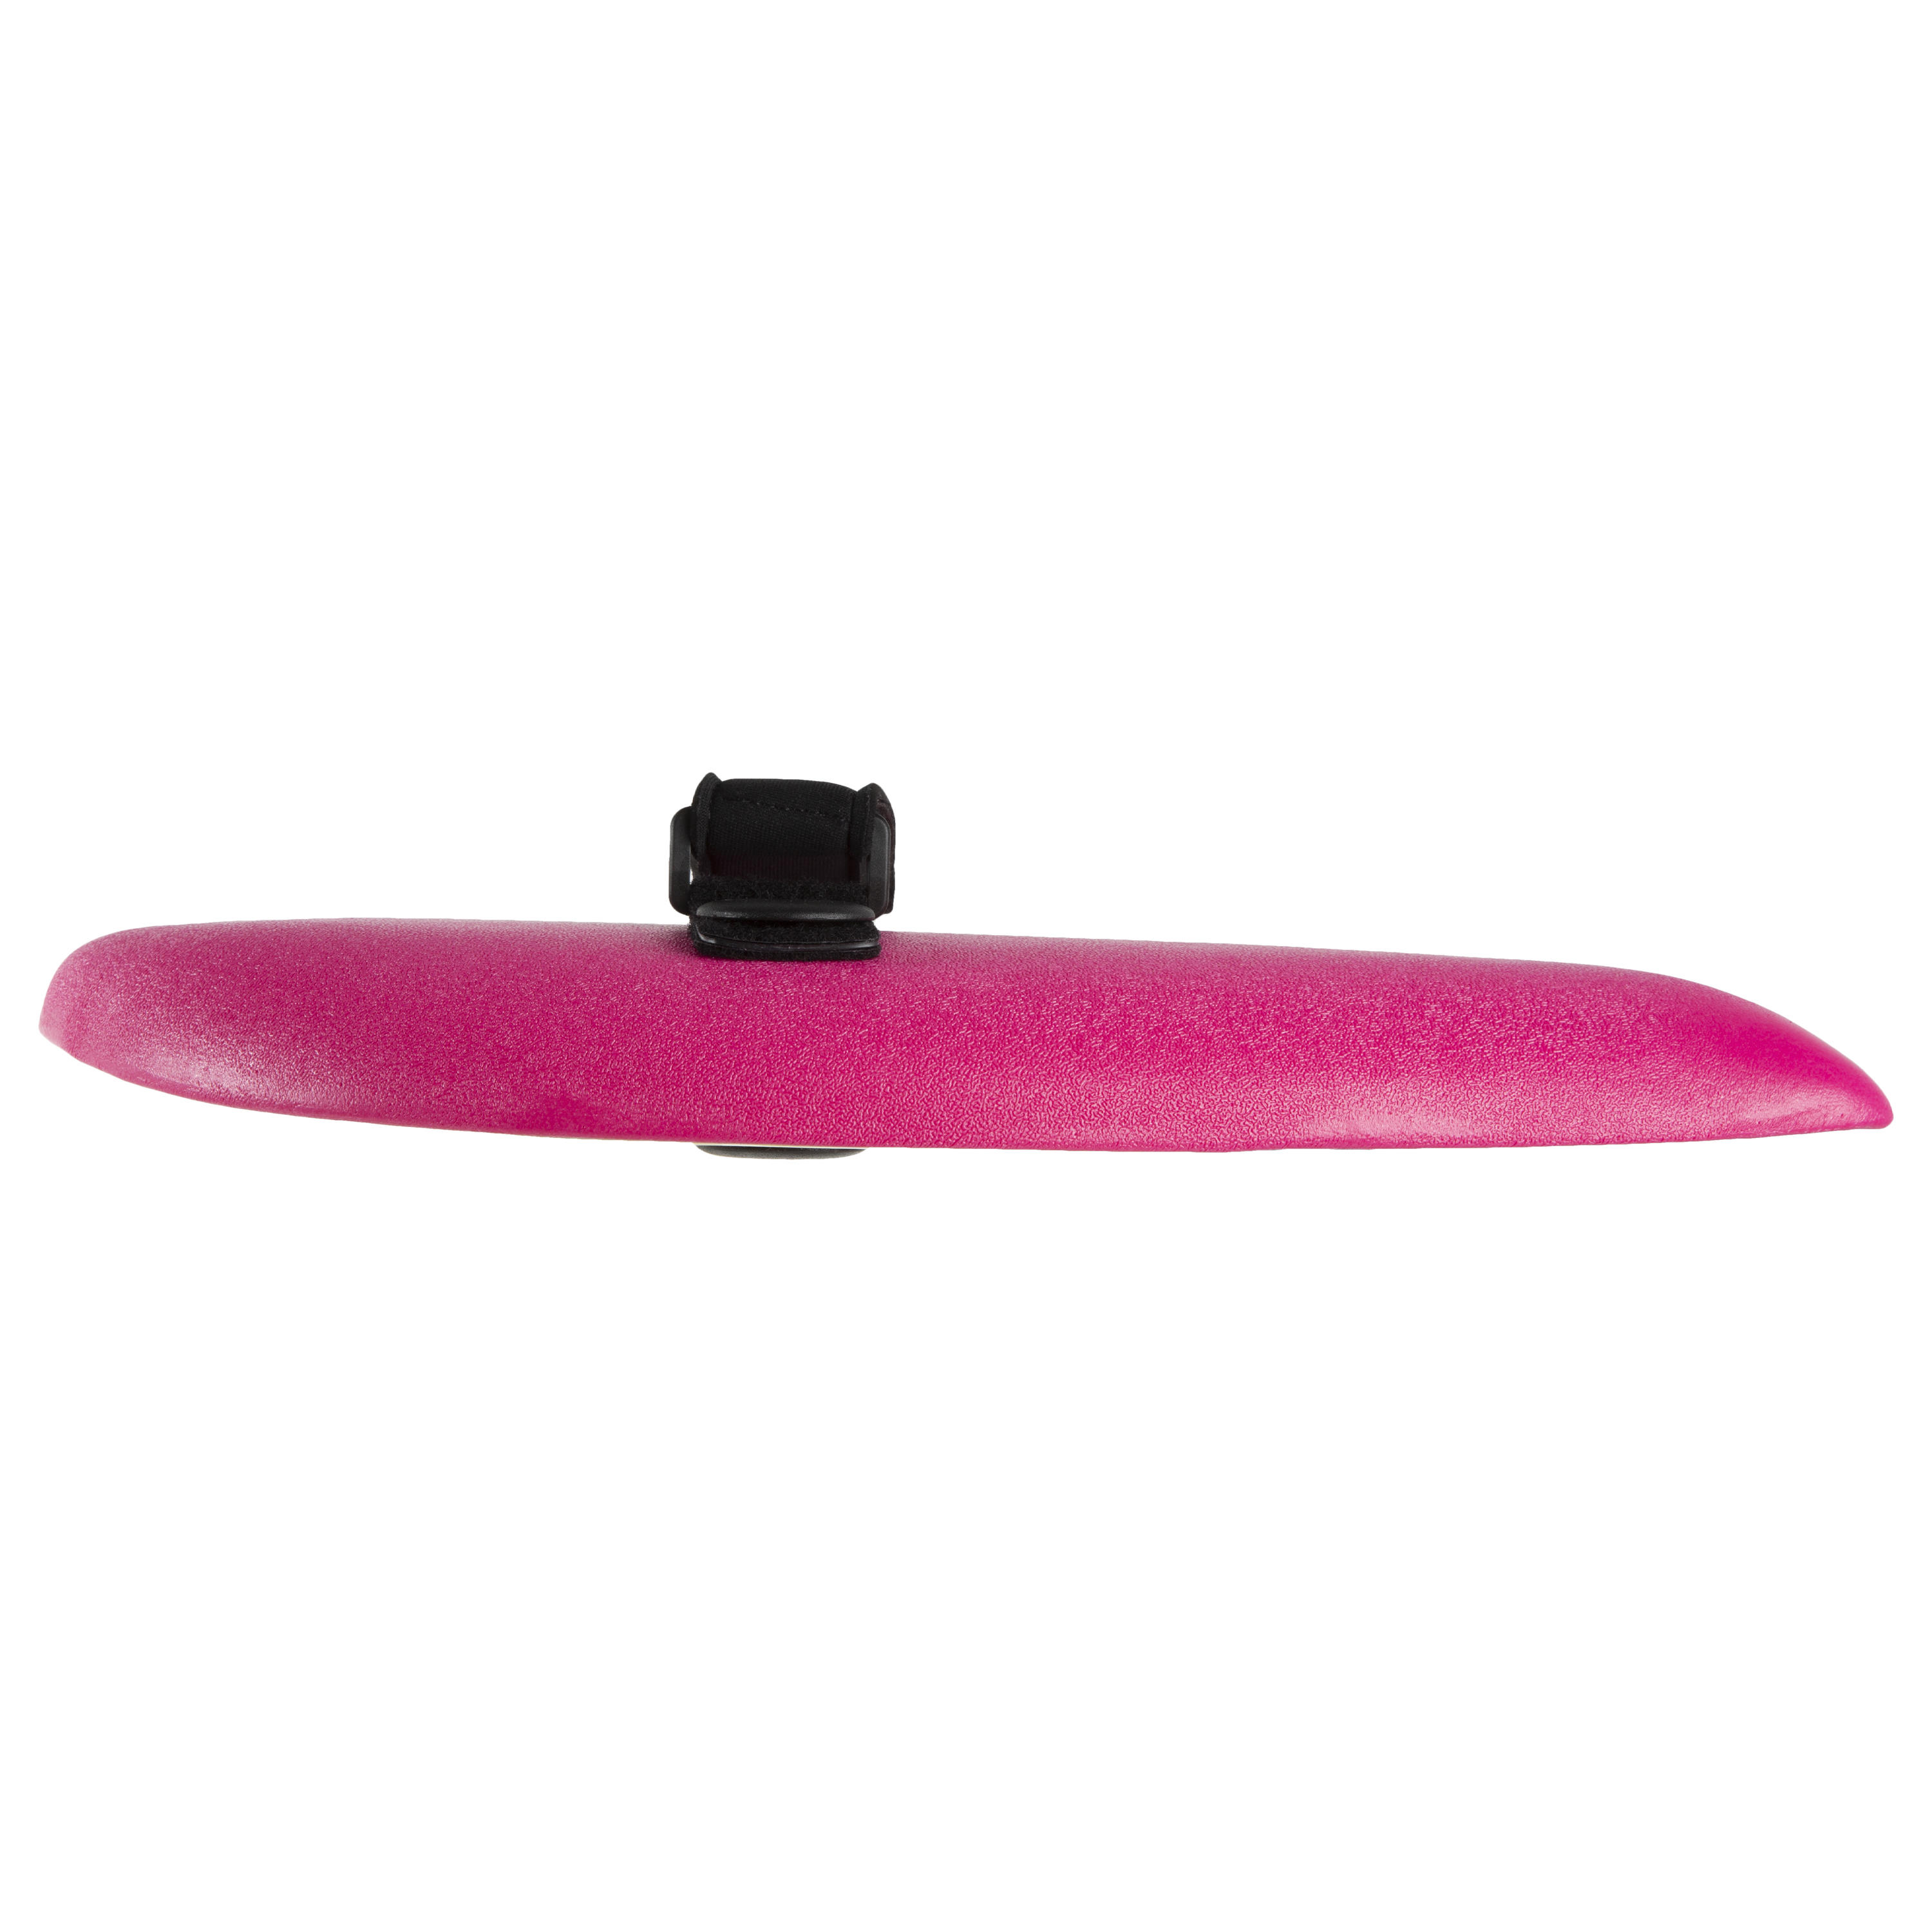 Bodysurfing Handplane board 100 pink 5/8